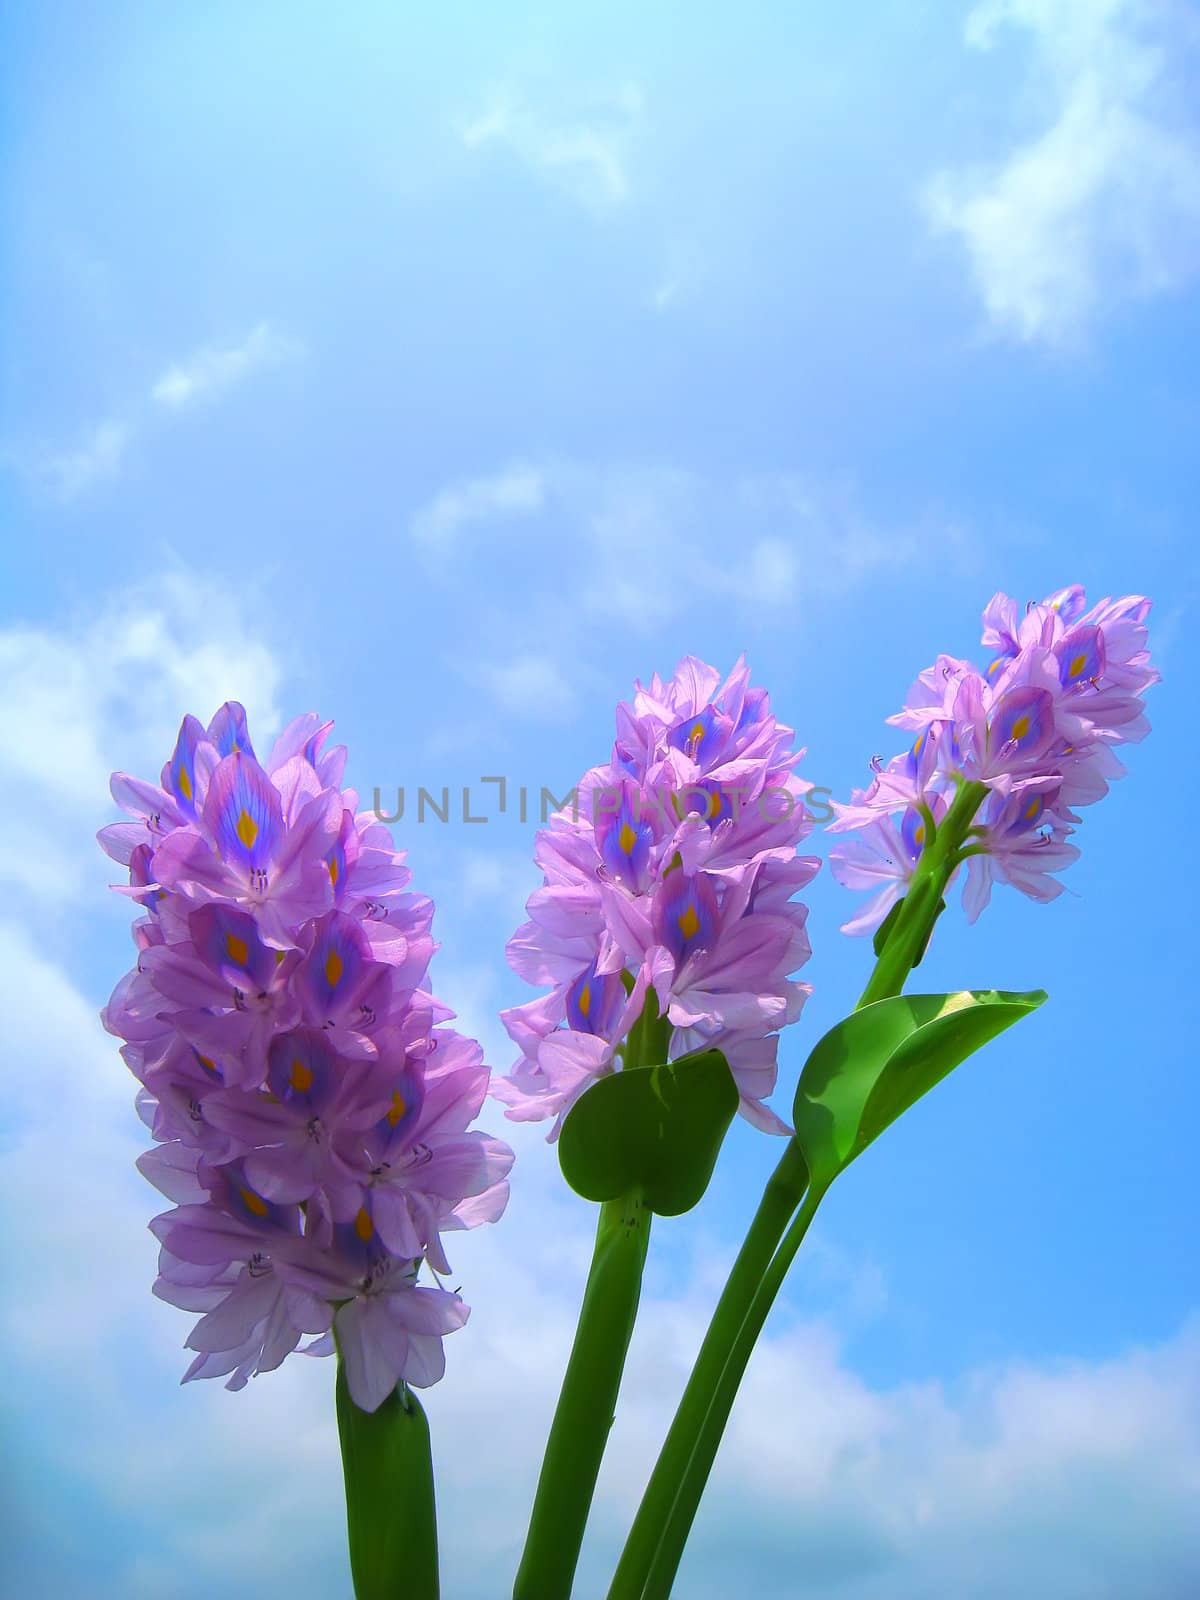 hyacinth on blue sky by dinhngochung